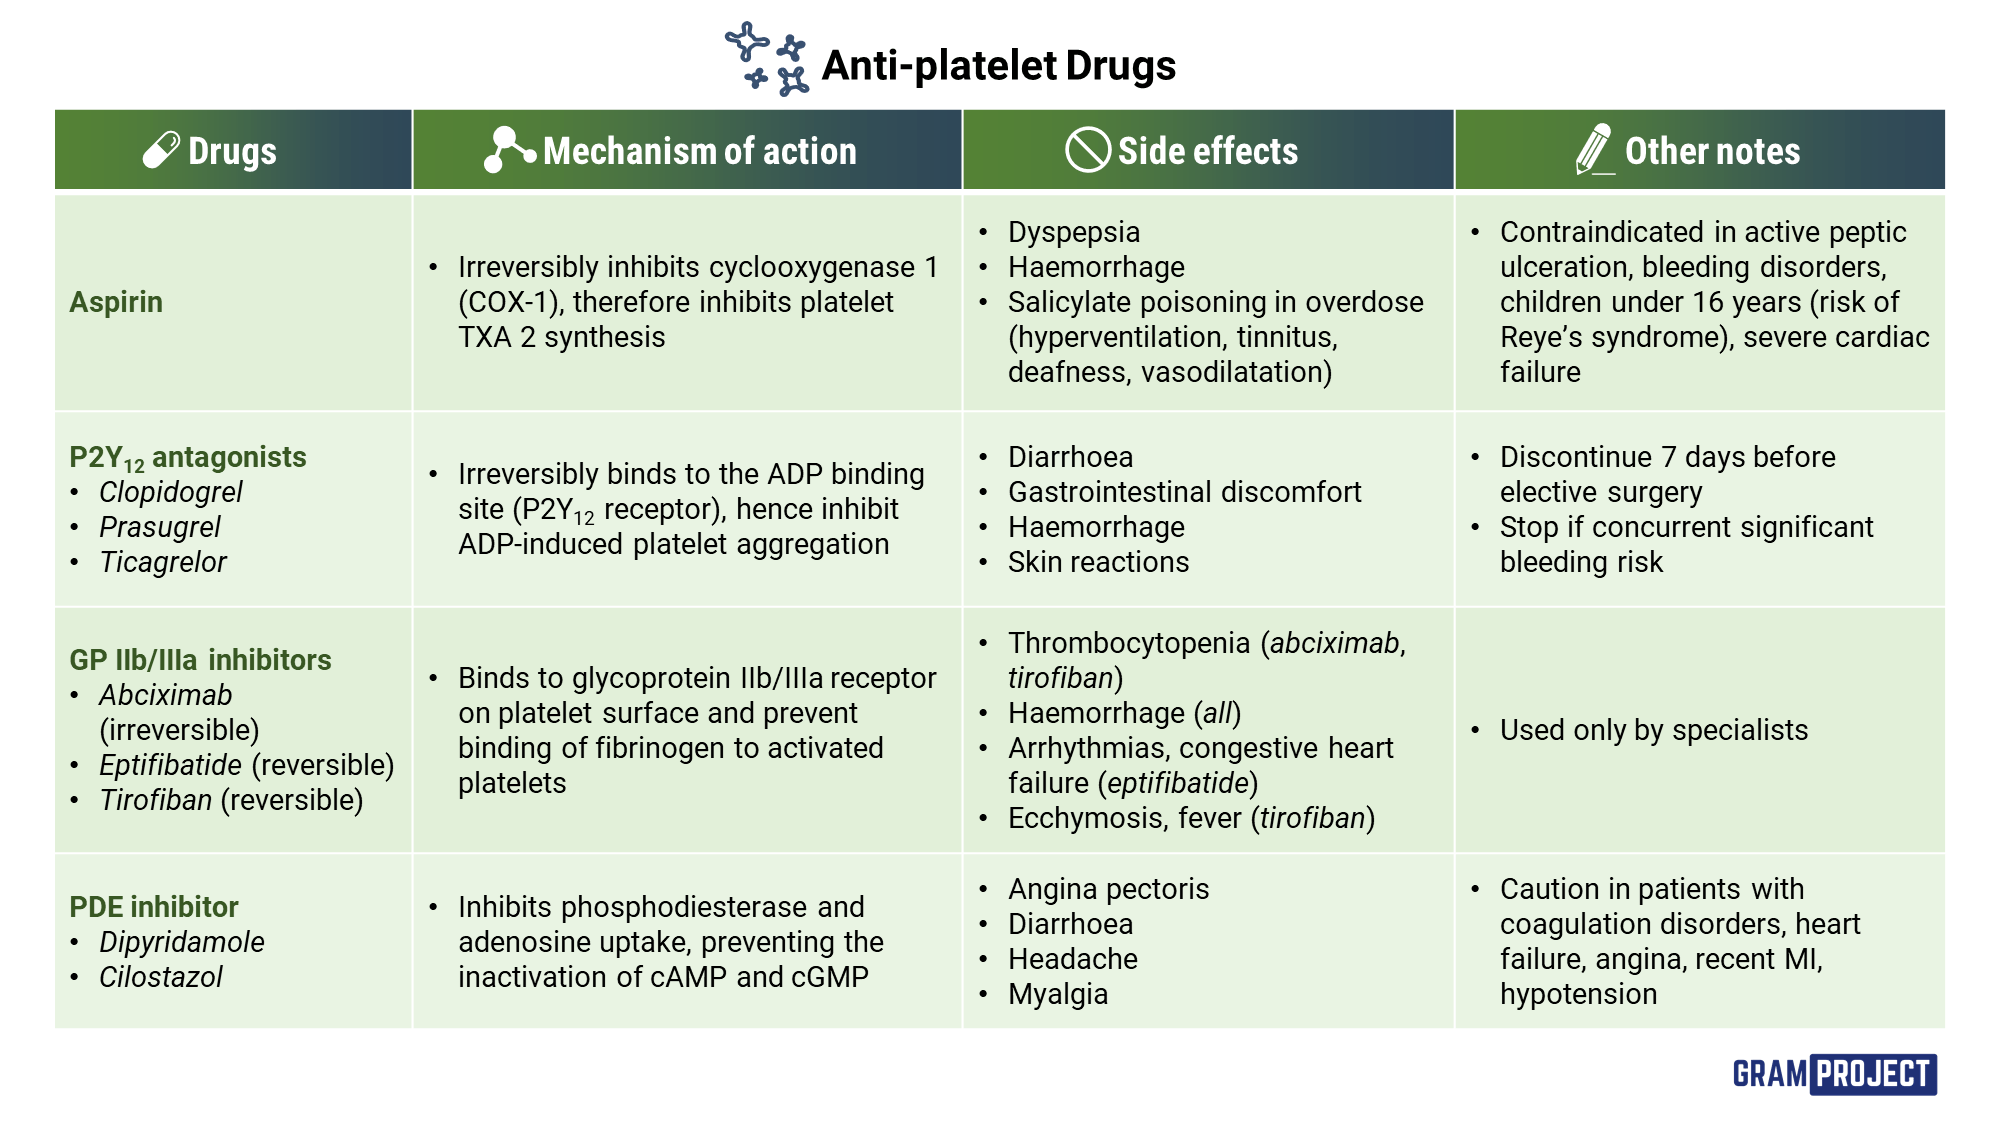 Summary table of anti-platelet drugs